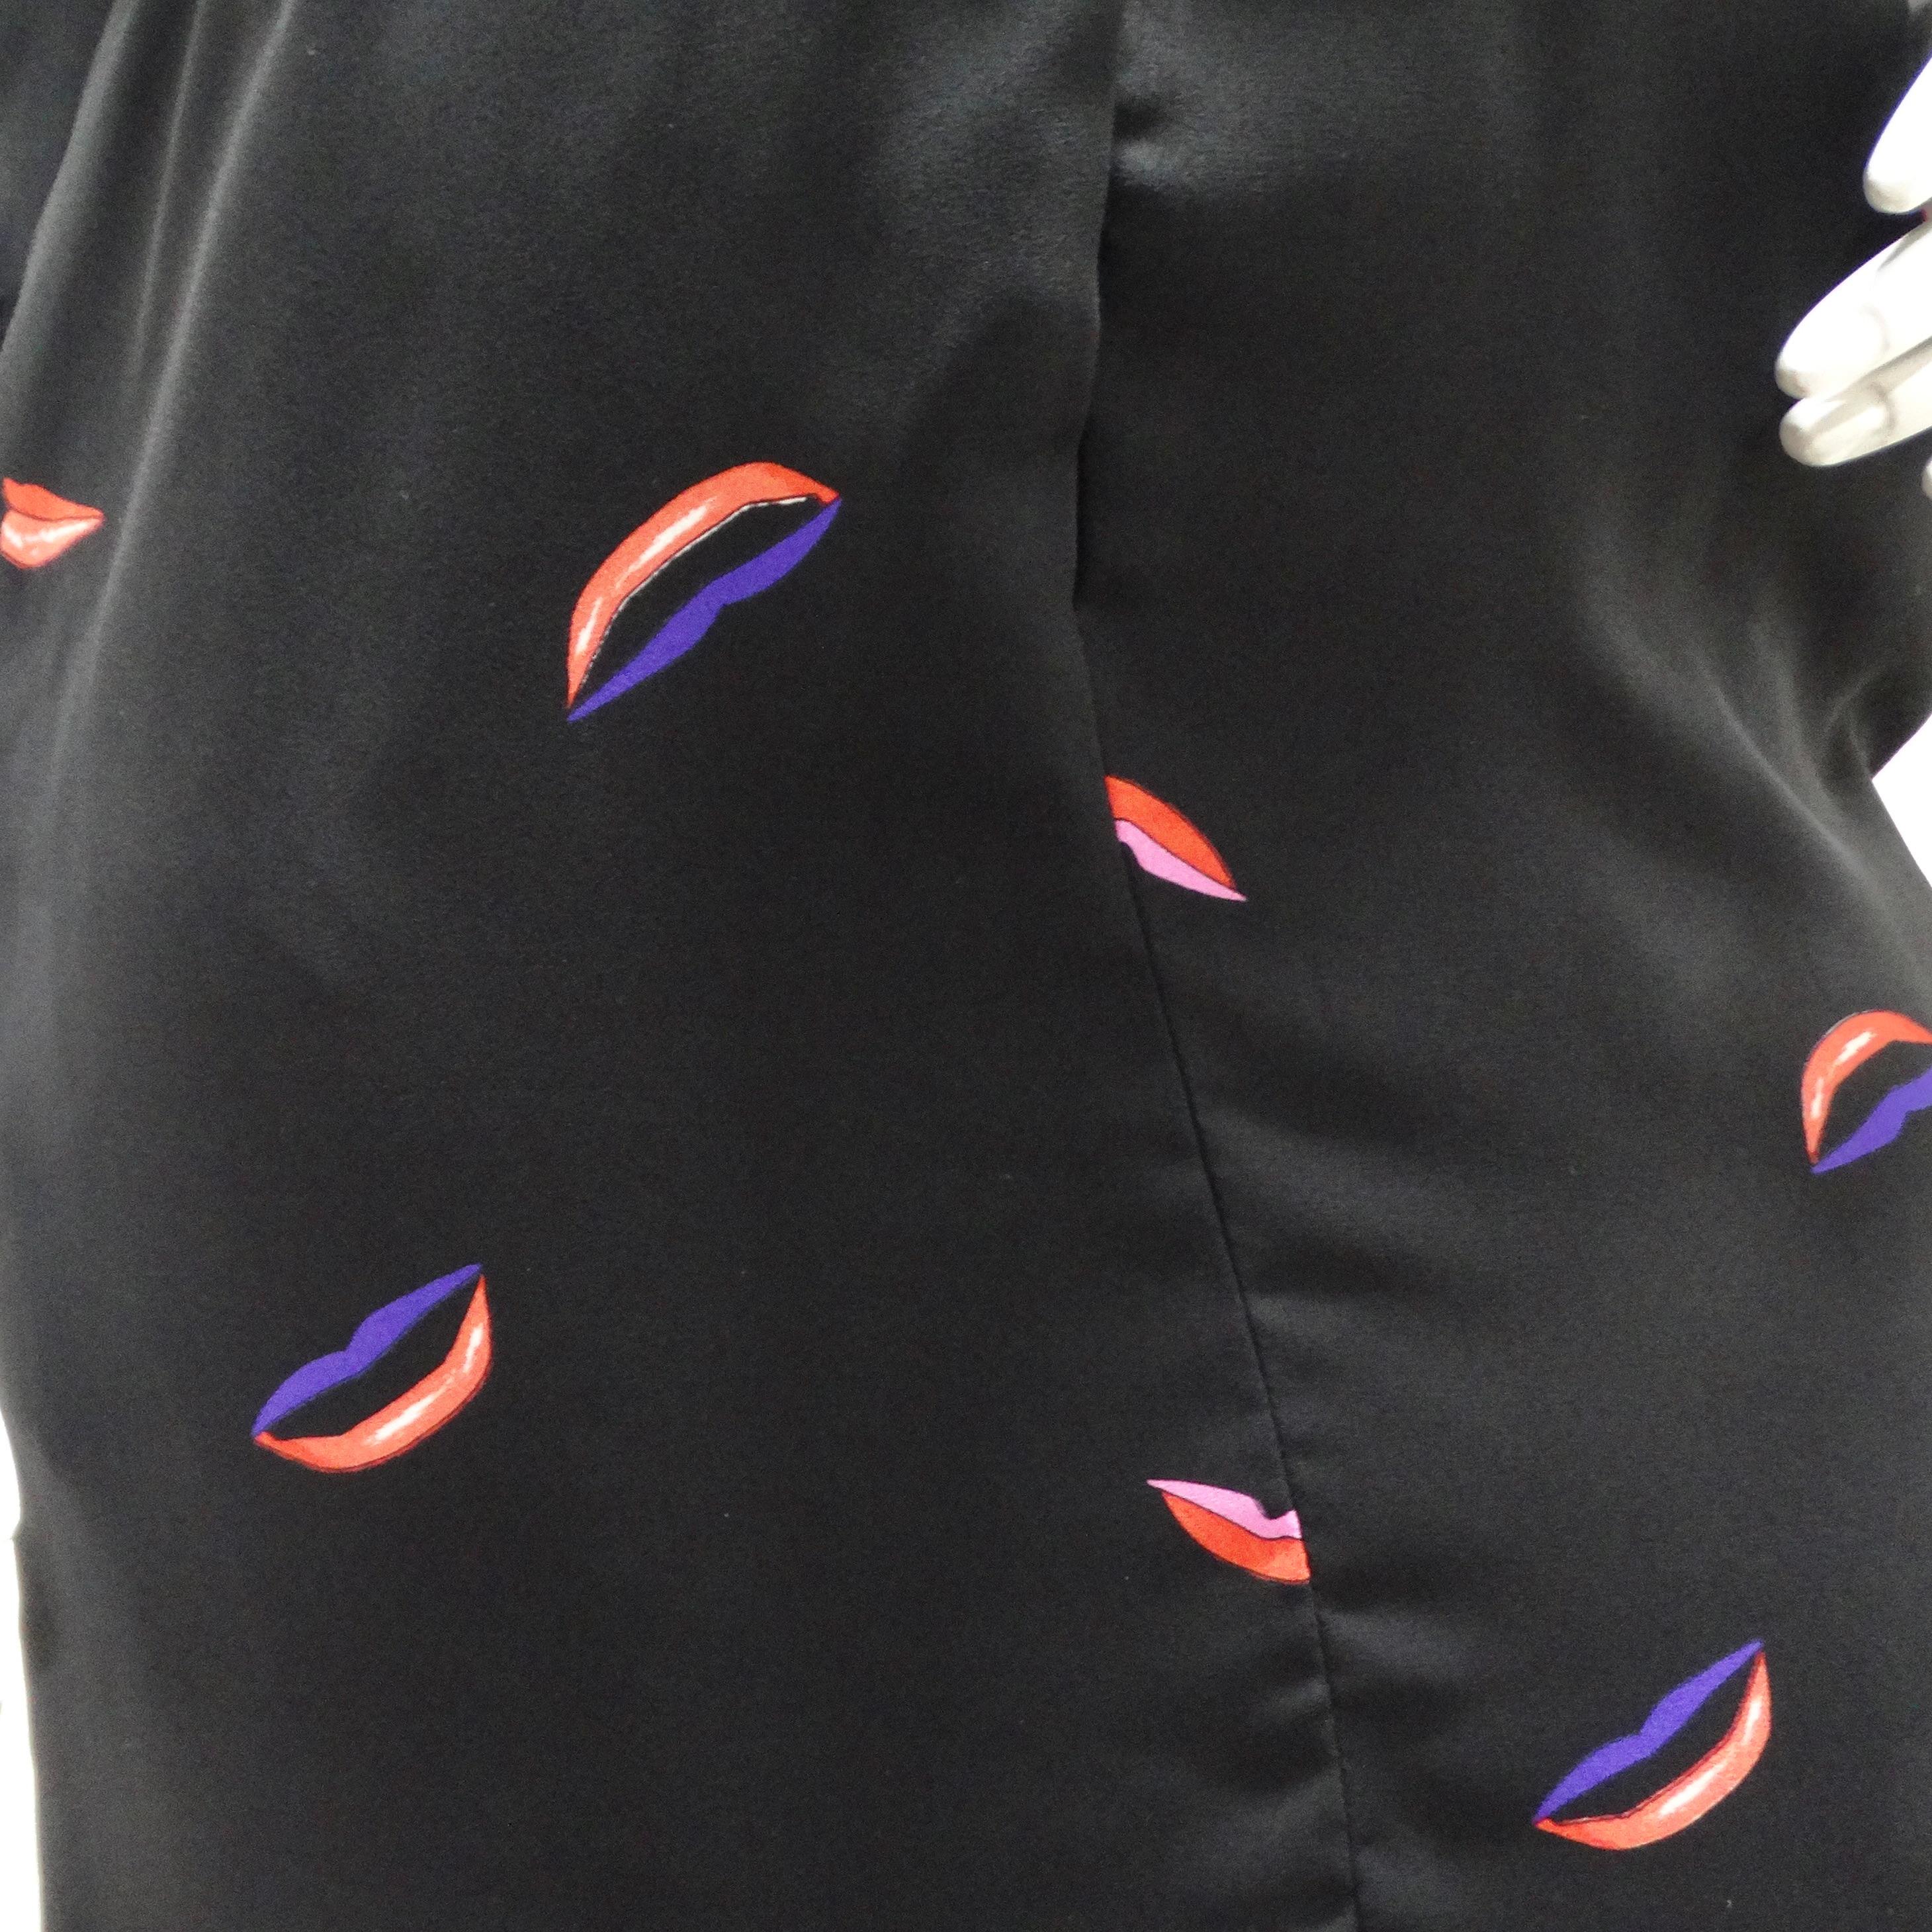 Hanae Mori 1980s Lips Print Dress In Excellent Condition For Sale In Scottsdale, AZ